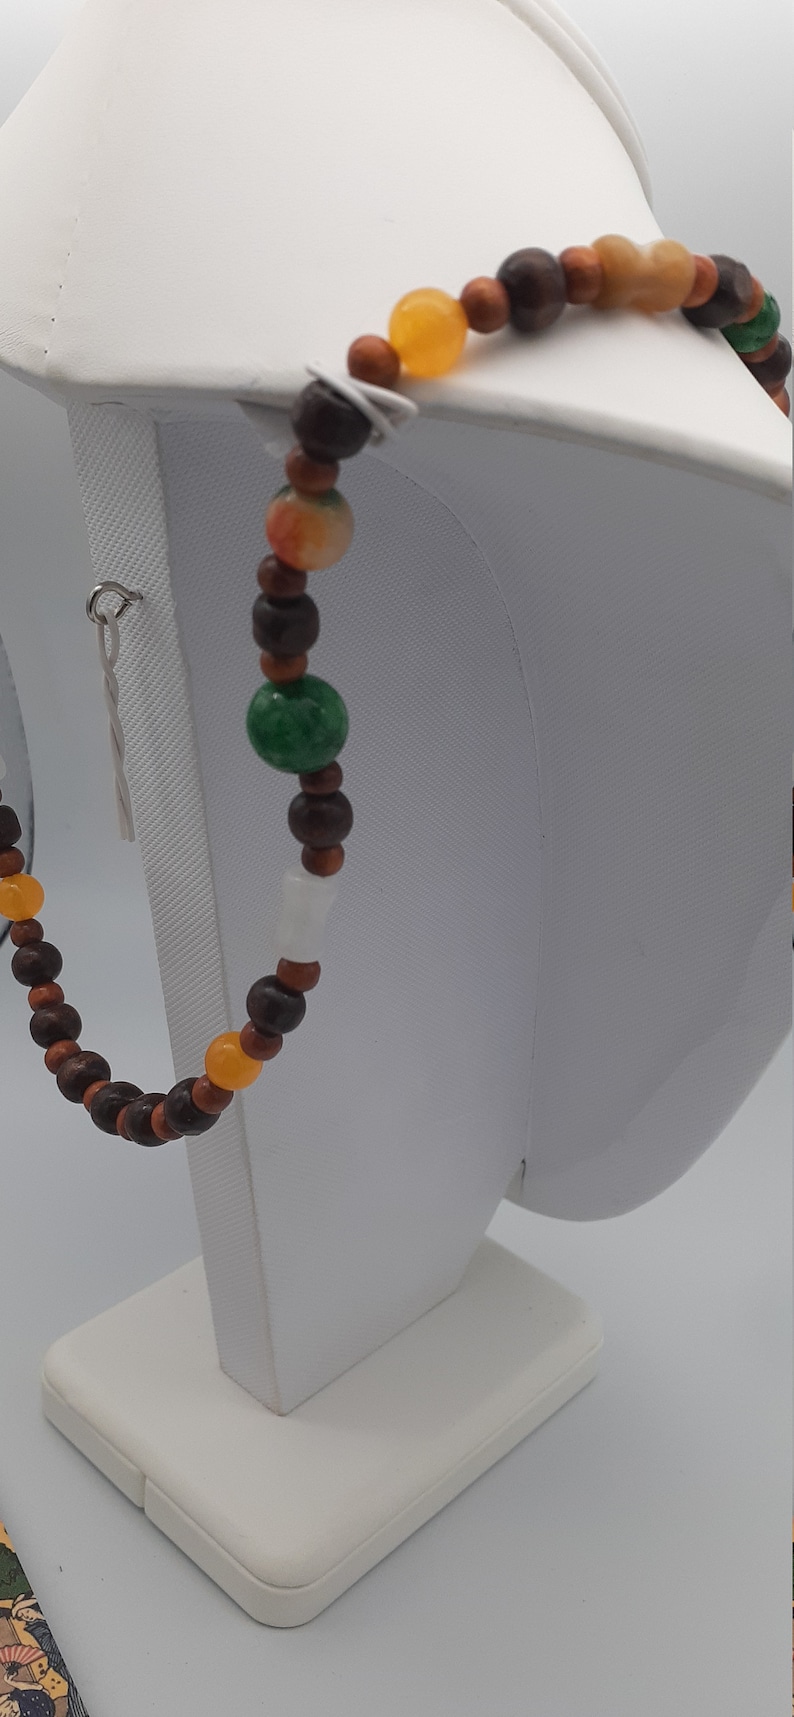 Bronze Happy Buddha with money bag pendant on necklacecof jade and wood beads